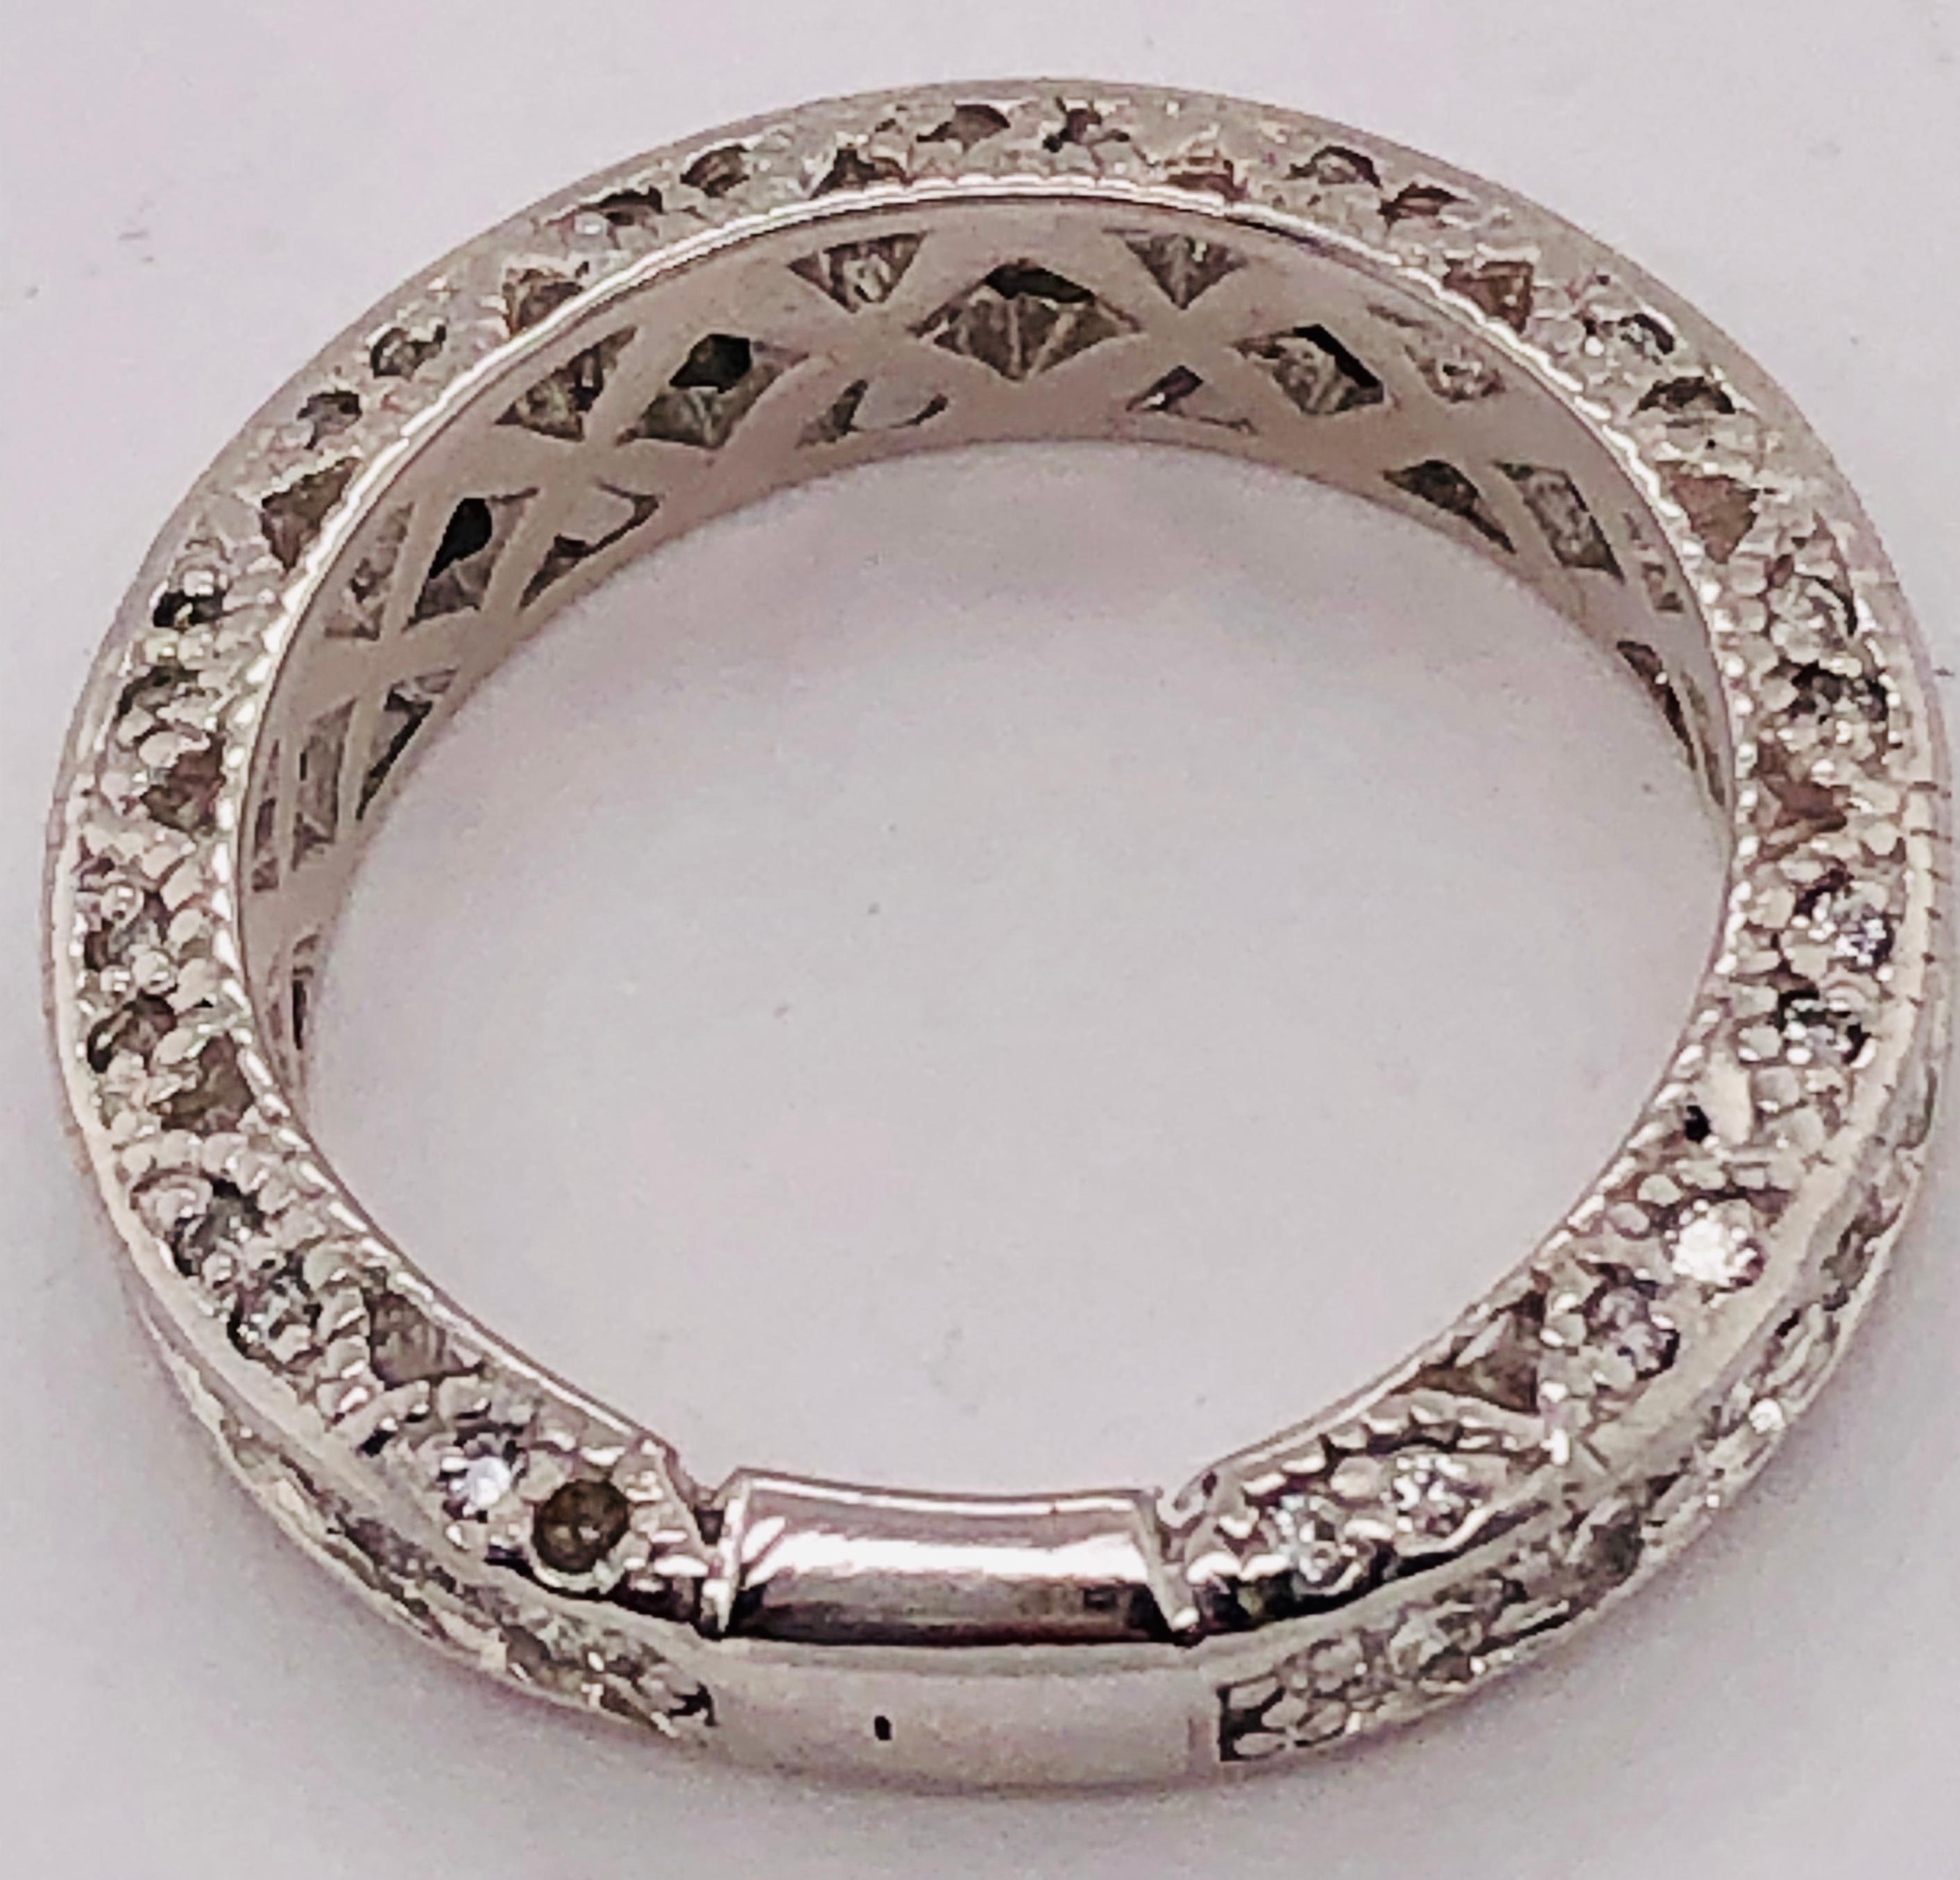 white gold diamond eternity ring